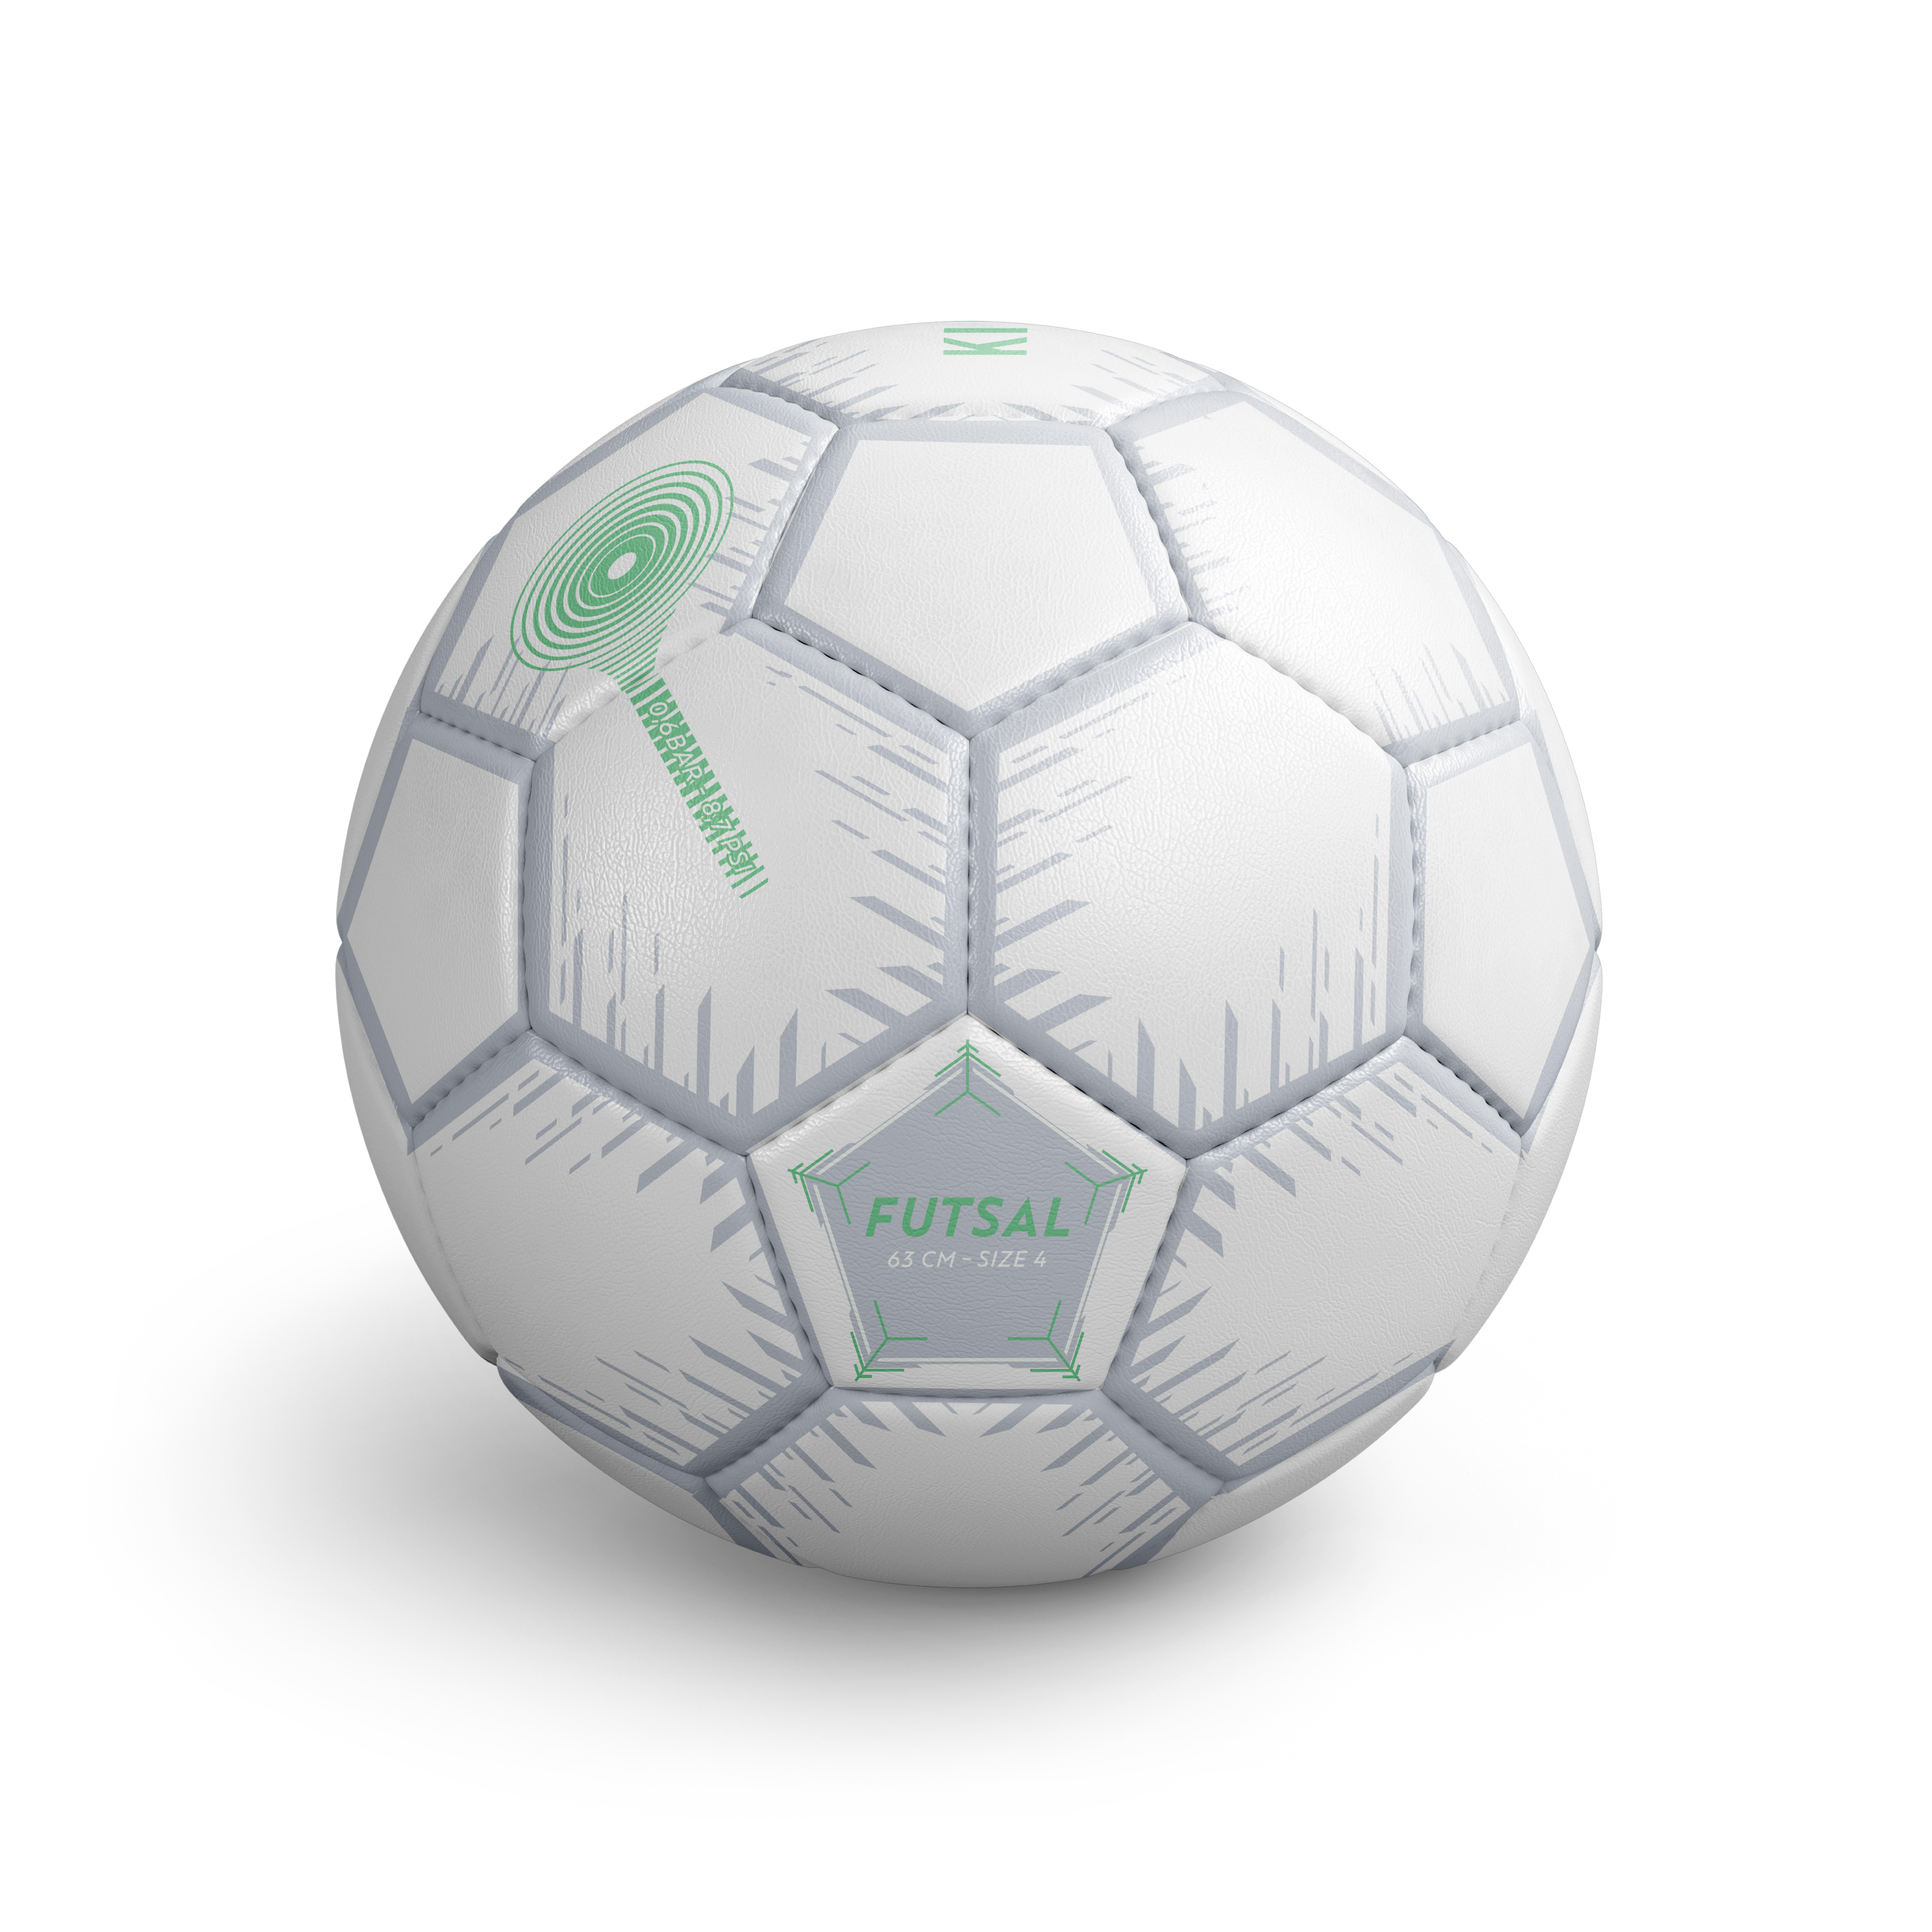 KIPSTA Ballon De Futsal Taille 4 (P&#xE9;rim&#xE8;tre 63cm) Rouge Et Blanc -